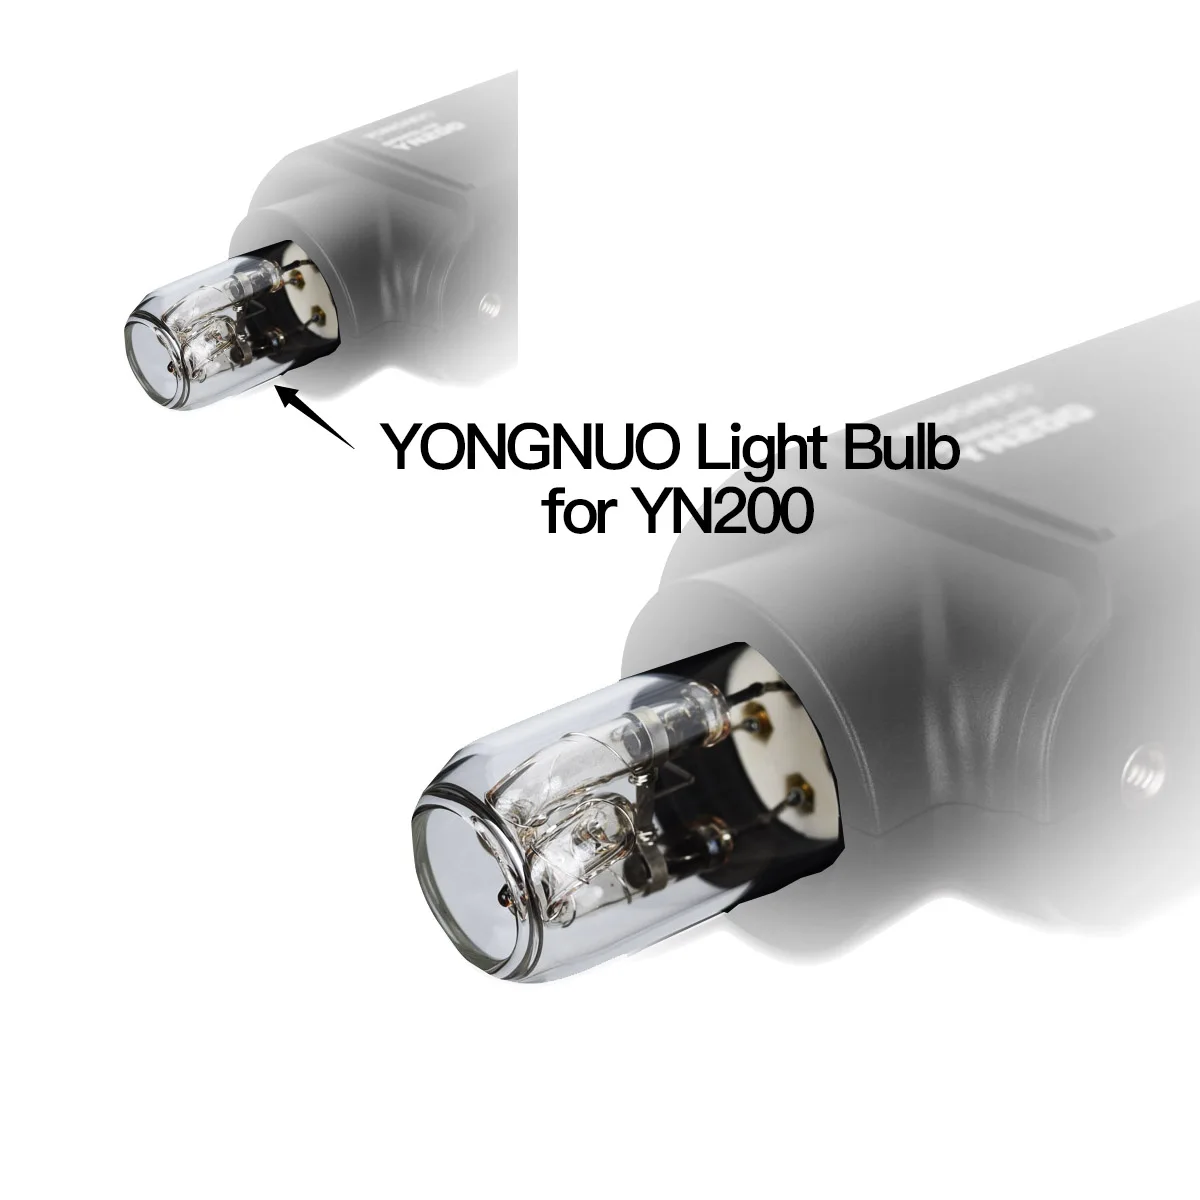 YONGNUO Light Bulb for YN200 Repair parts